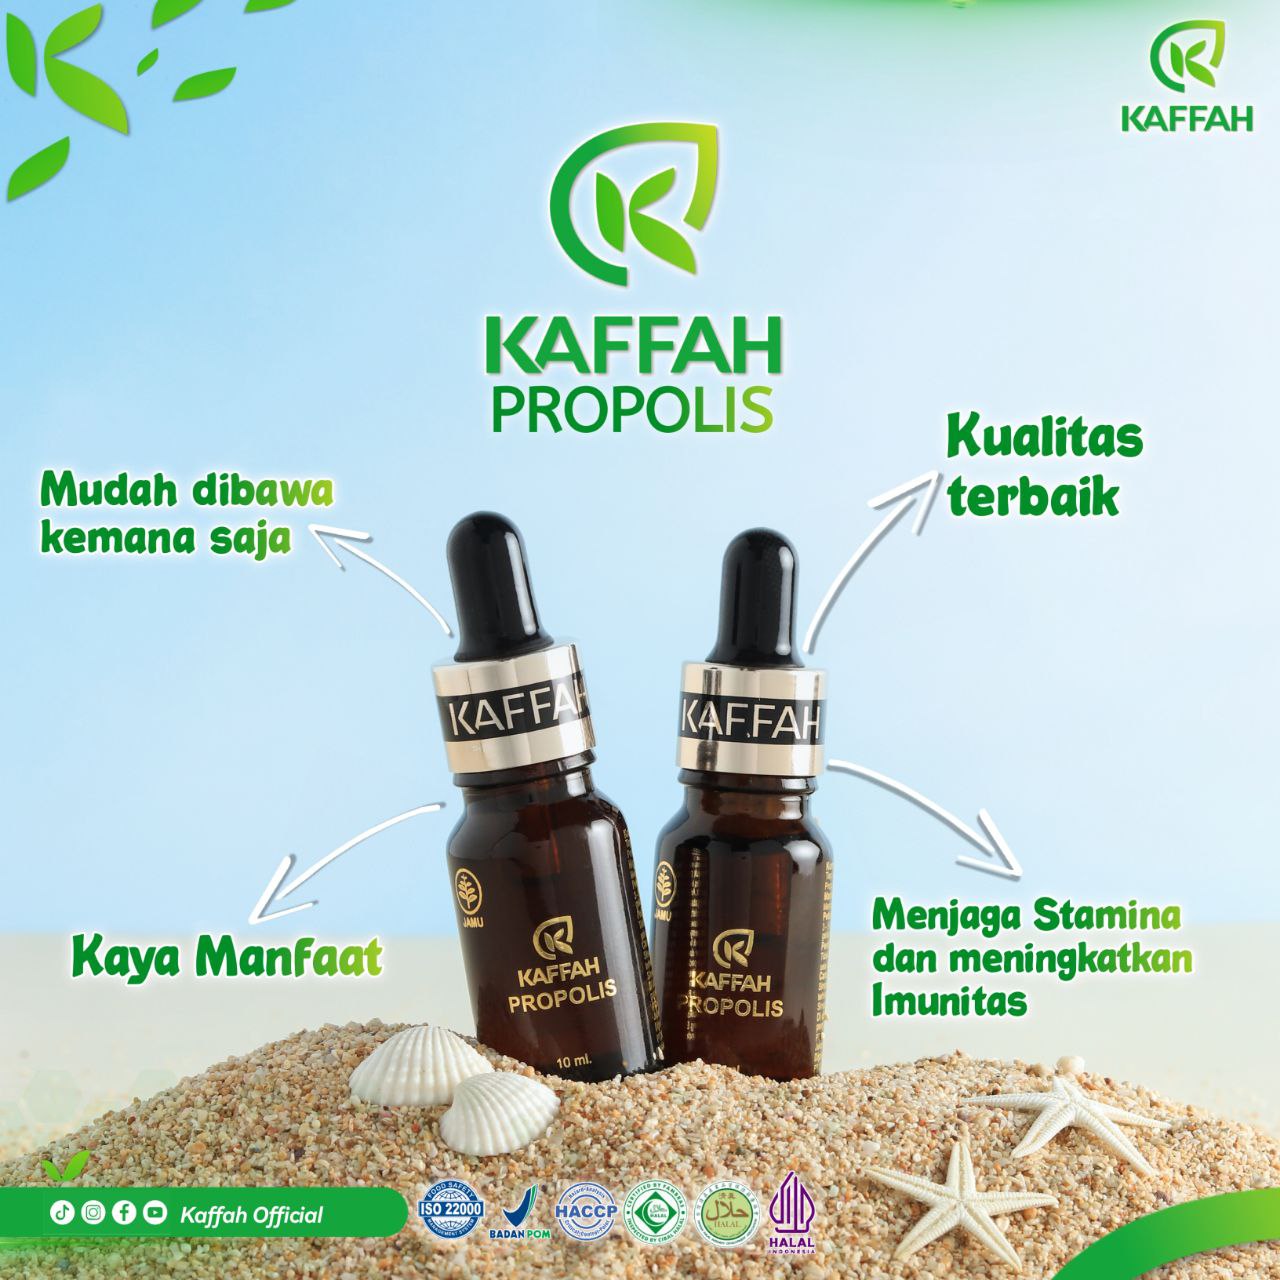 Distributor Kaffah Propolis Surabaya Terbaik